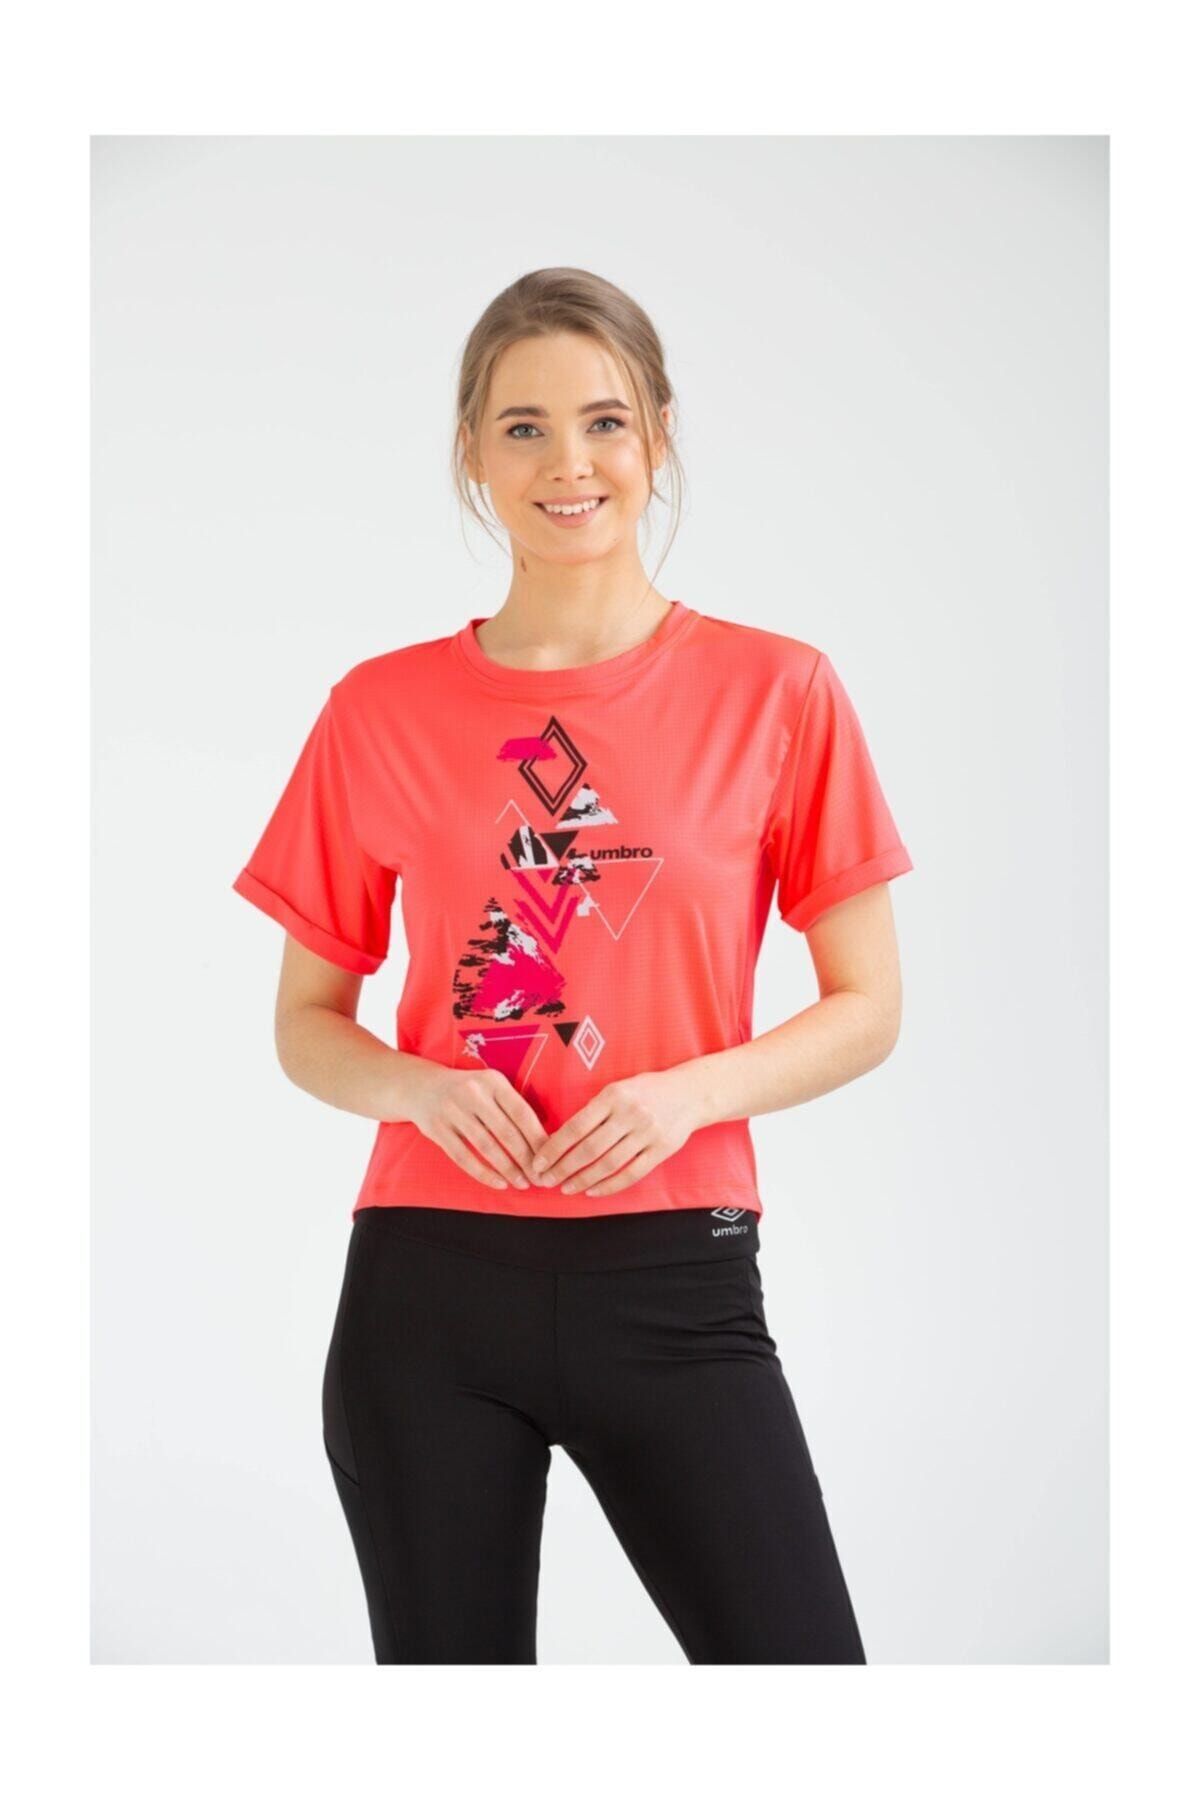 Umbro Kadın T-shirt Vf-0006 Vyan Tshirt